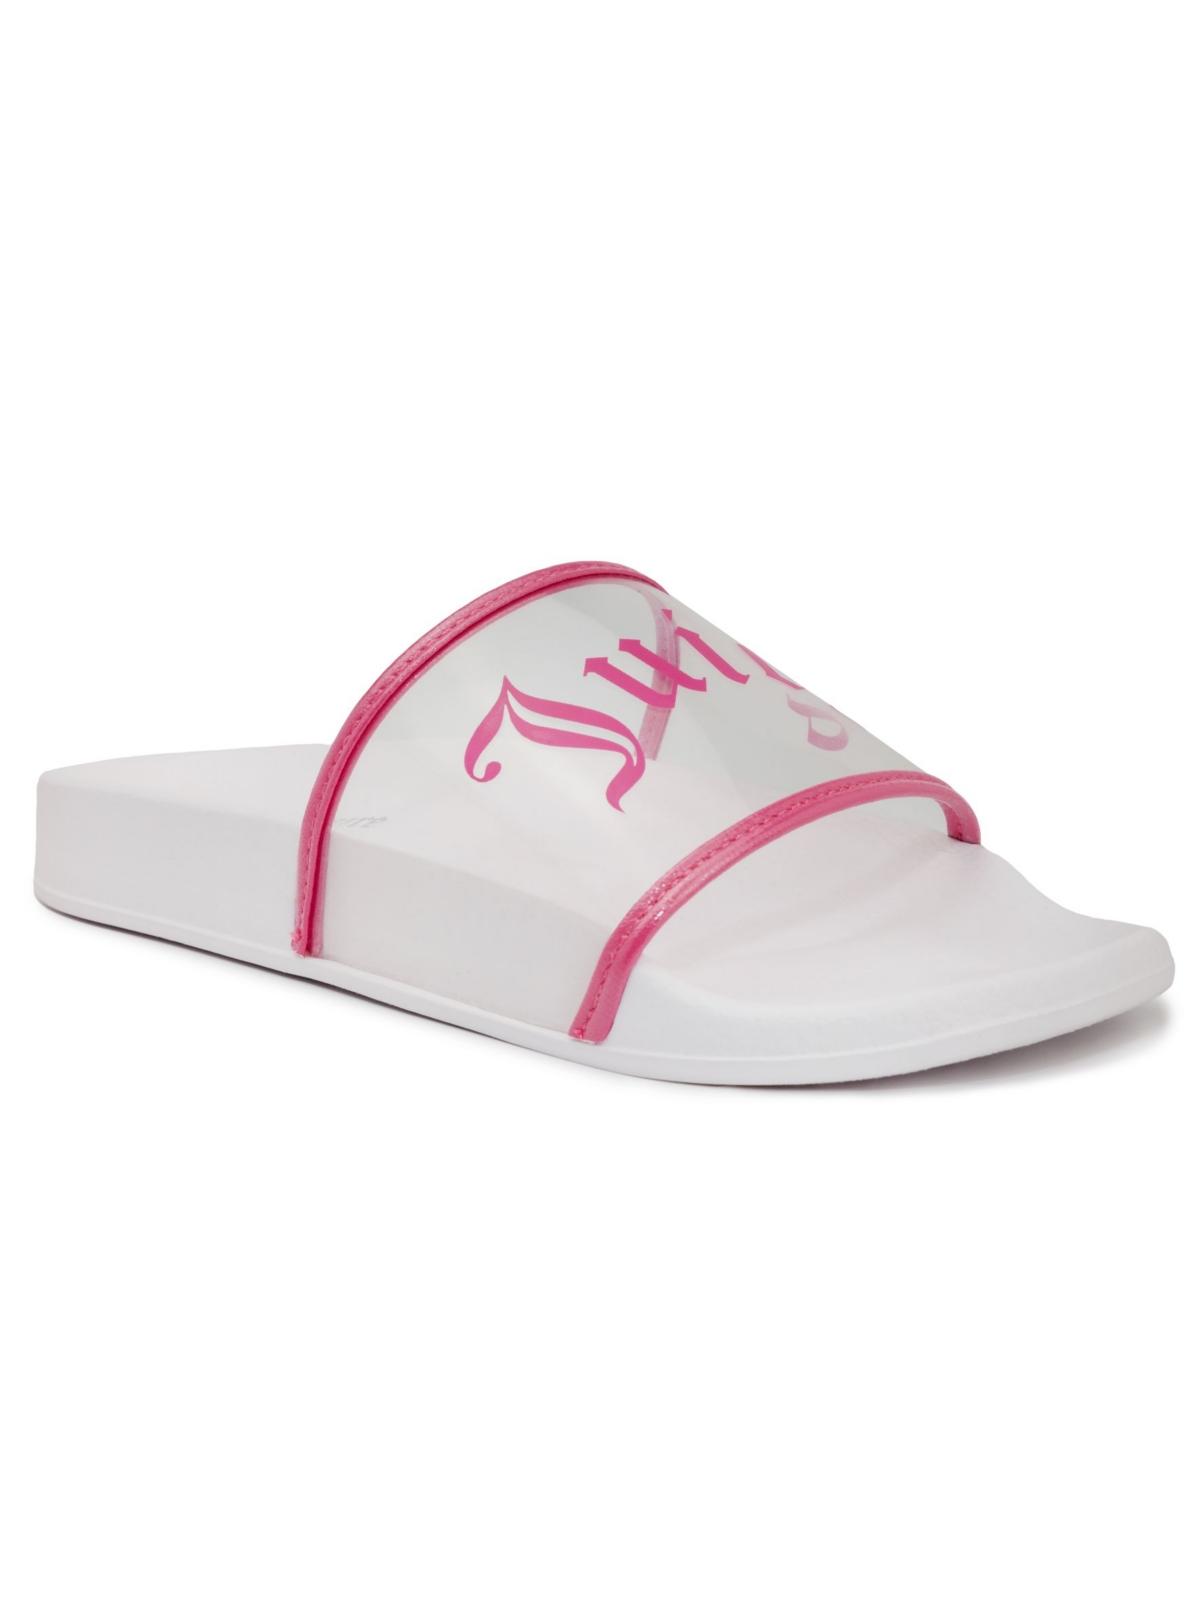 Juicy Couture Wanderlust Womens Slip On Flat Slide Sandals In White